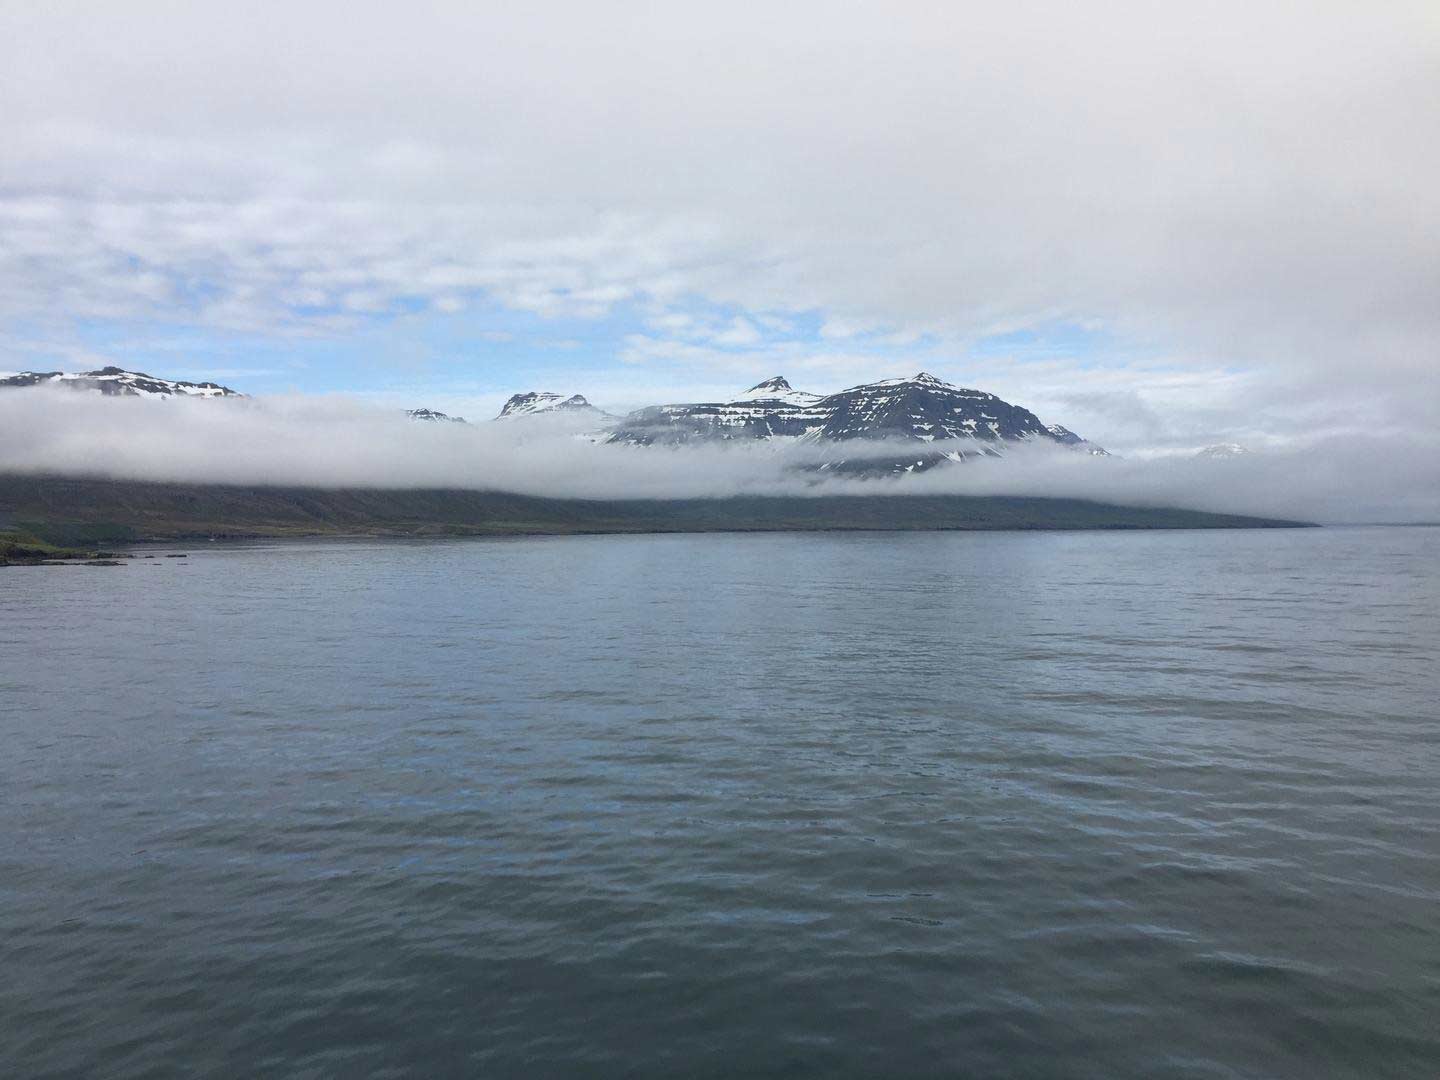 16 juin : Arrivée en Islande à Seyðisfjörður